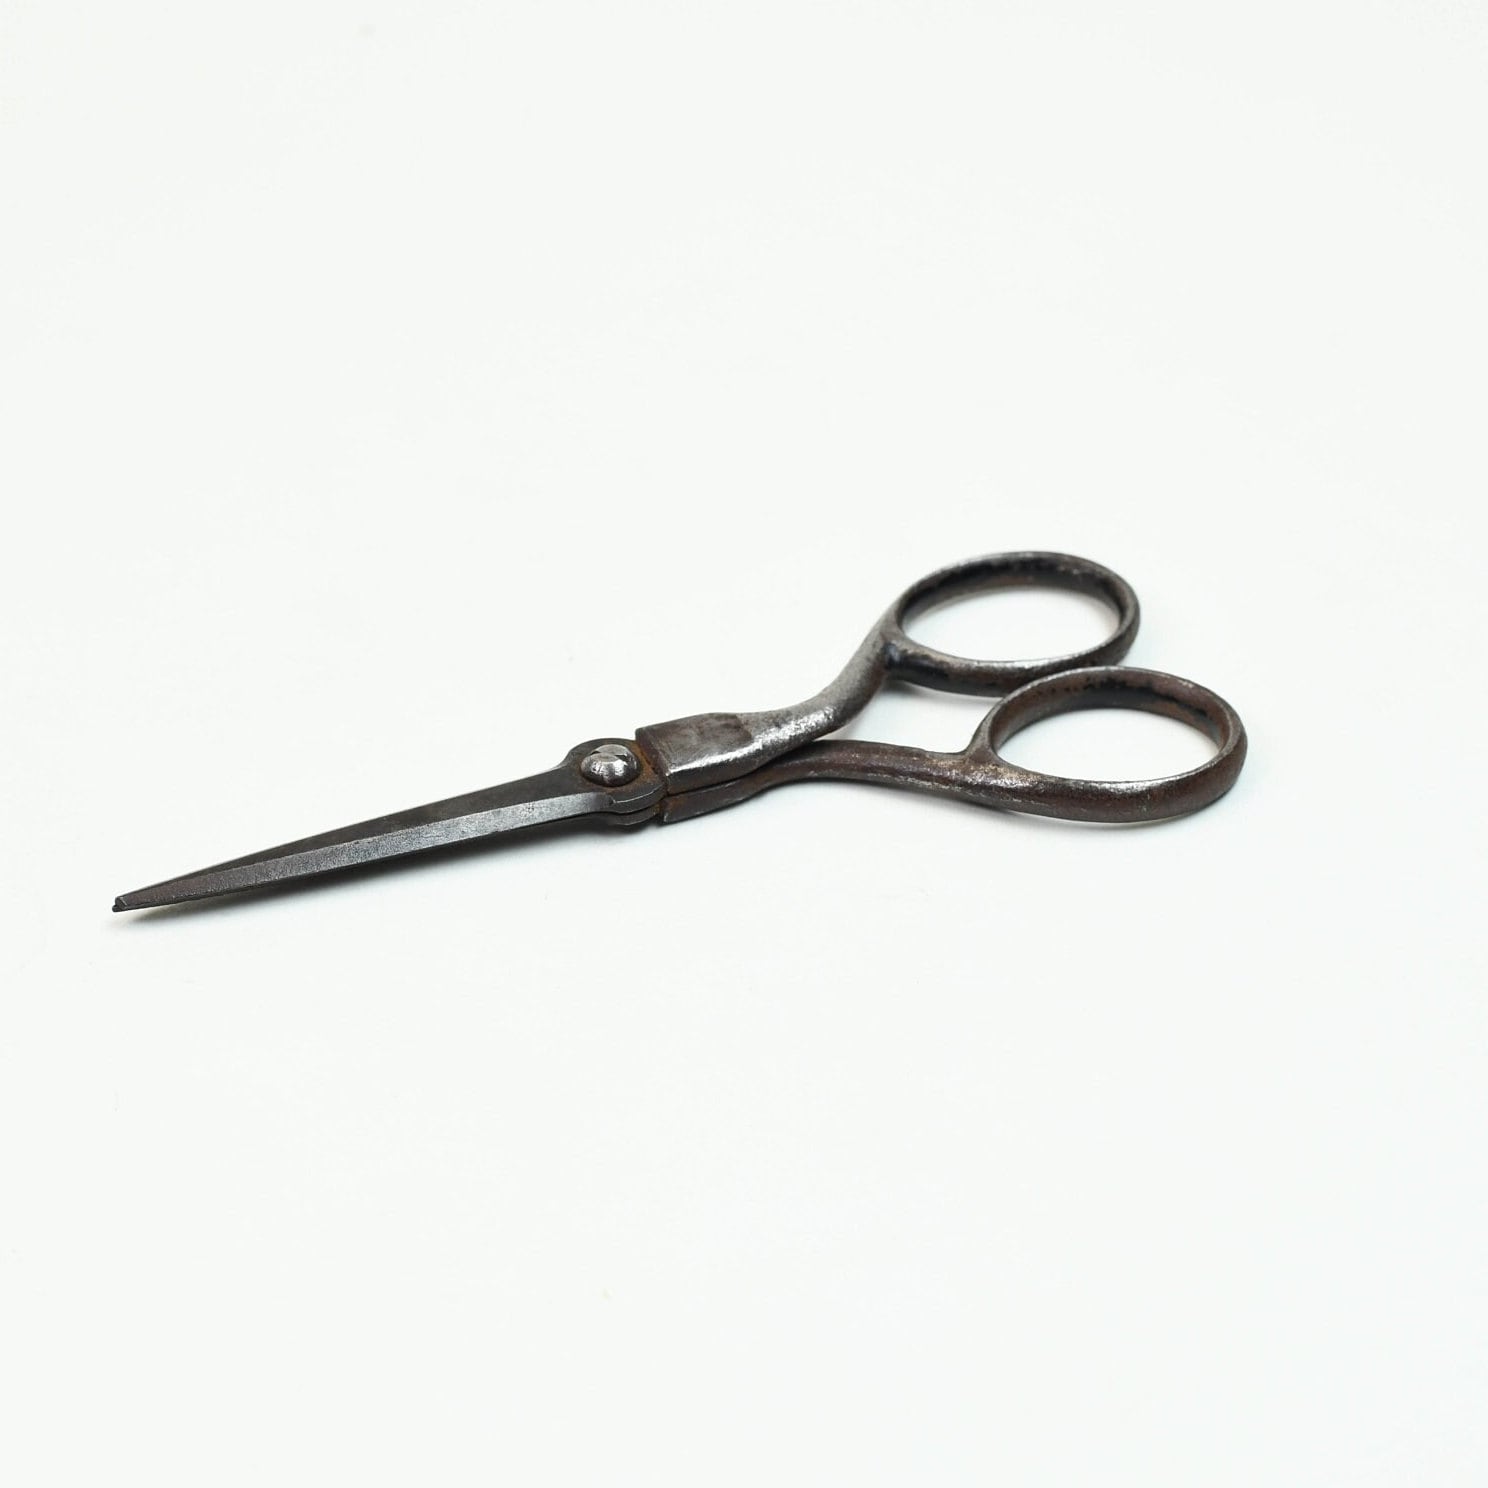 Vintage Antique Scissors or Shears, Black Handle